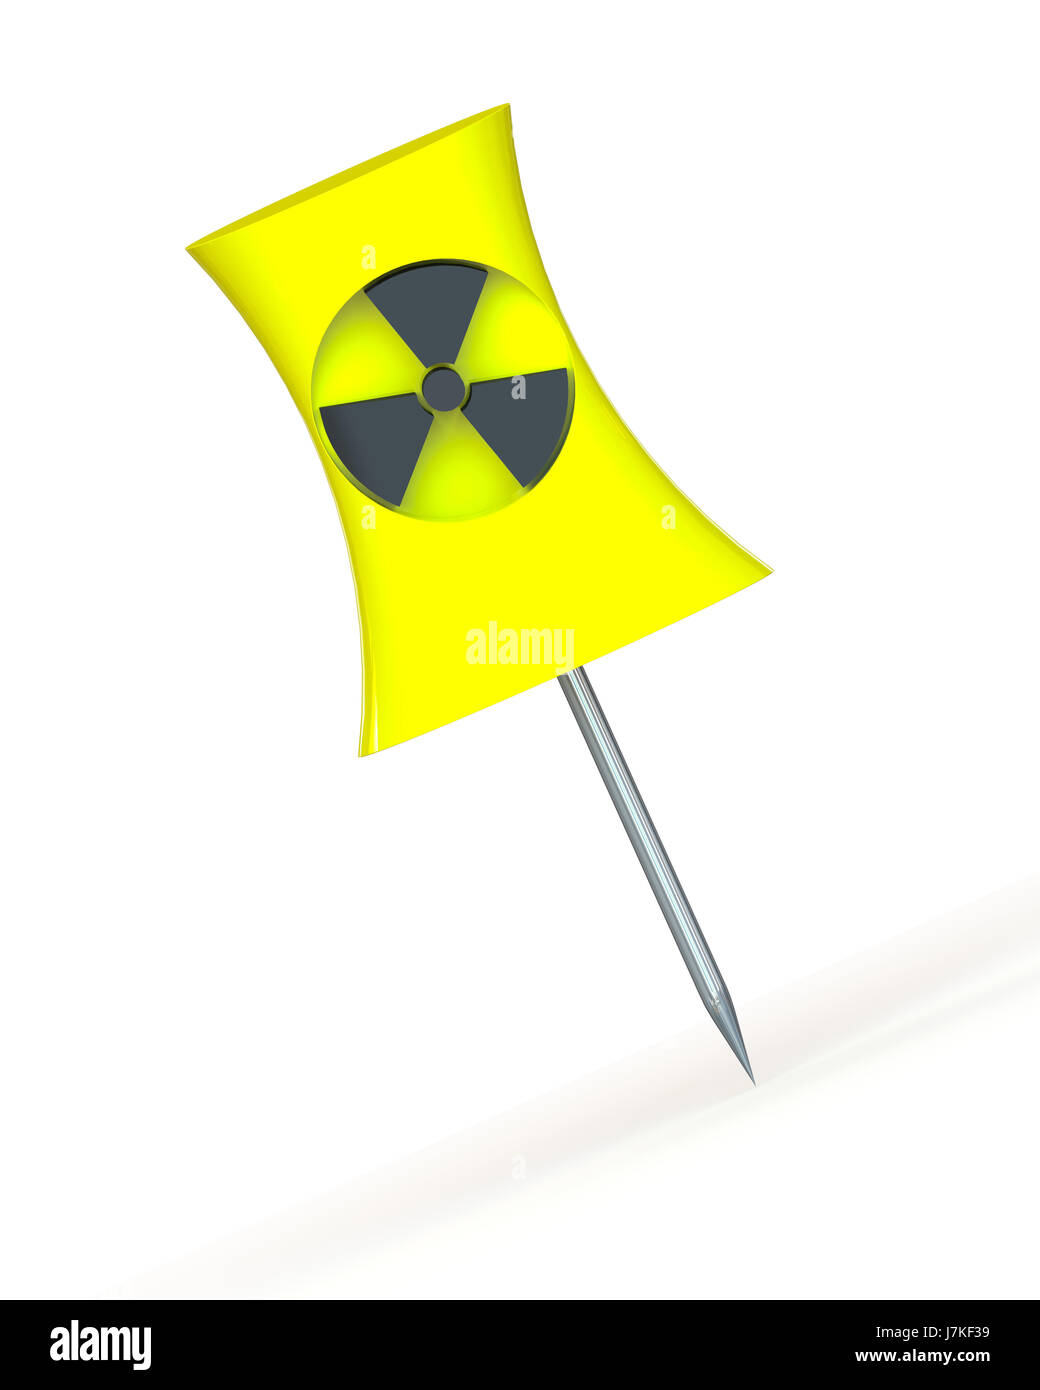 risk power station atom radioactive reactor nuclear health environment Stock Photo